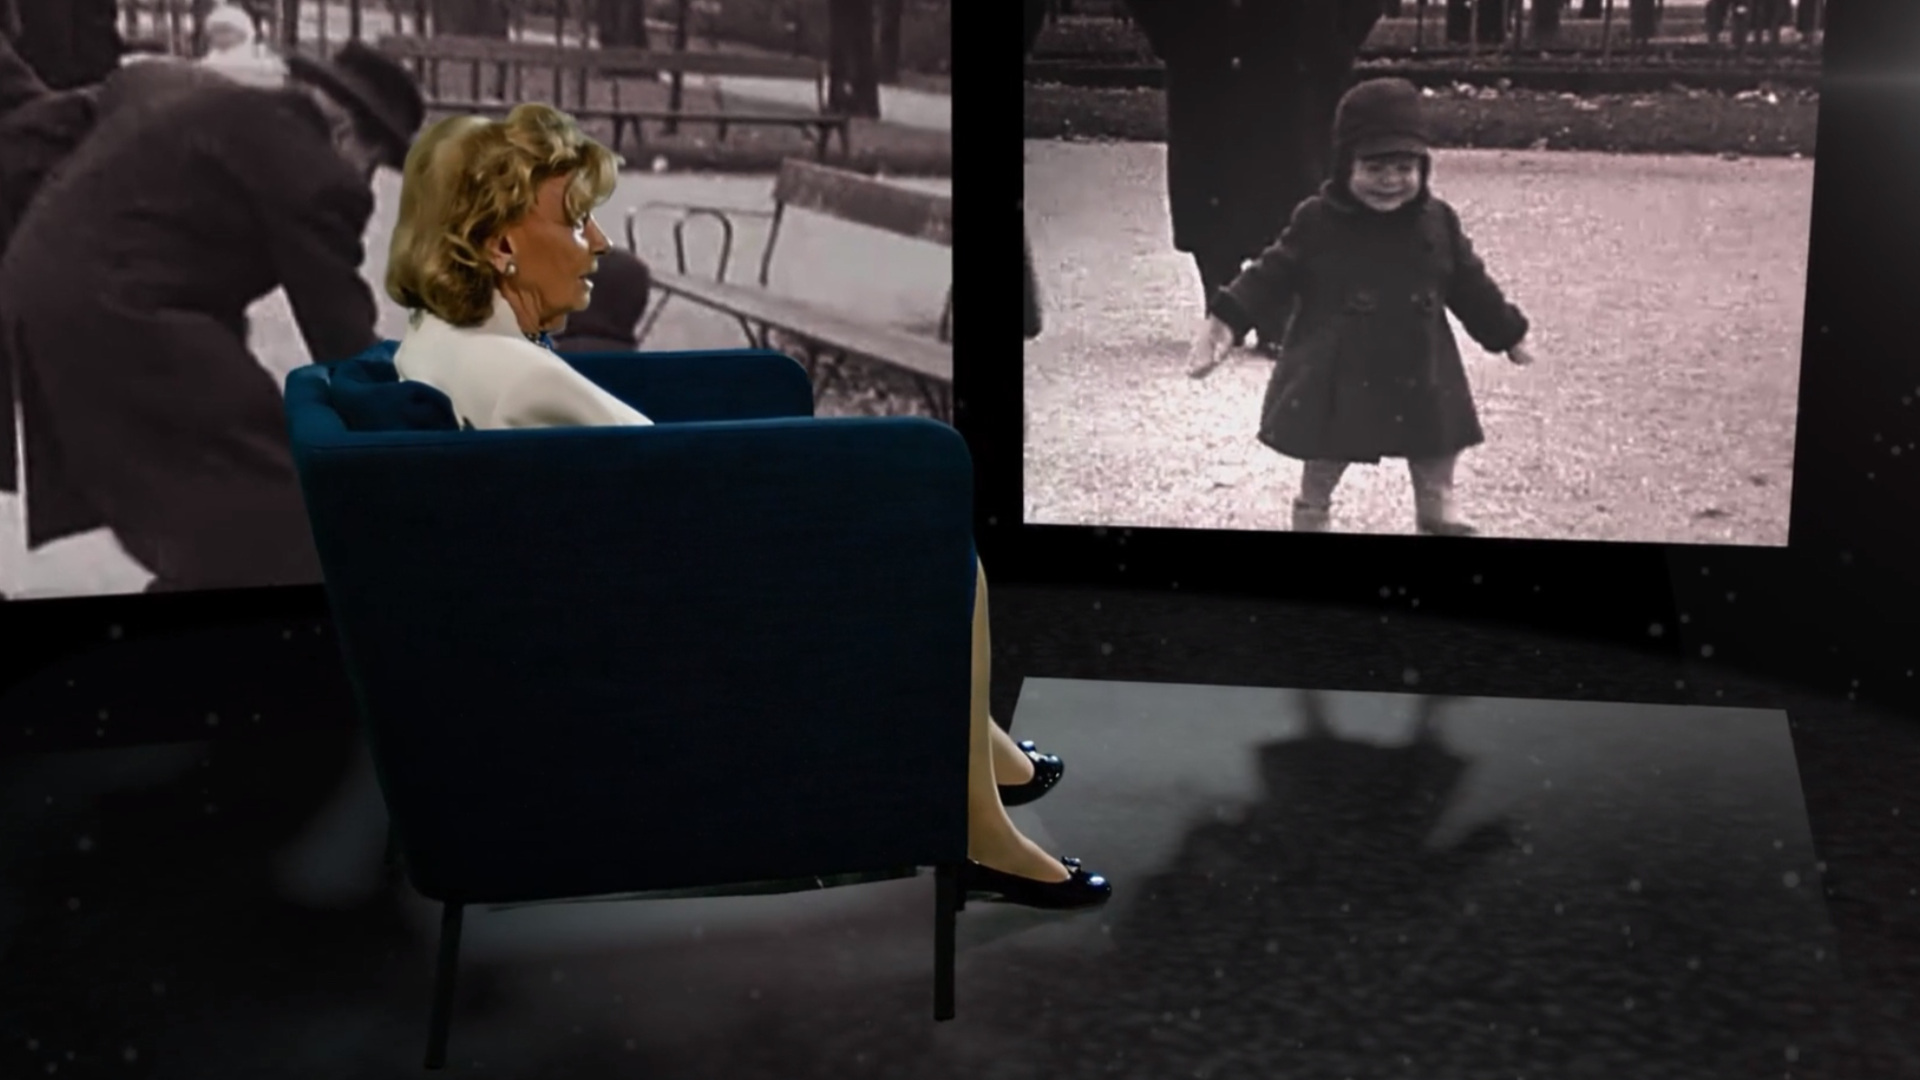 Holocaust survivor shares her reminiscences in VR